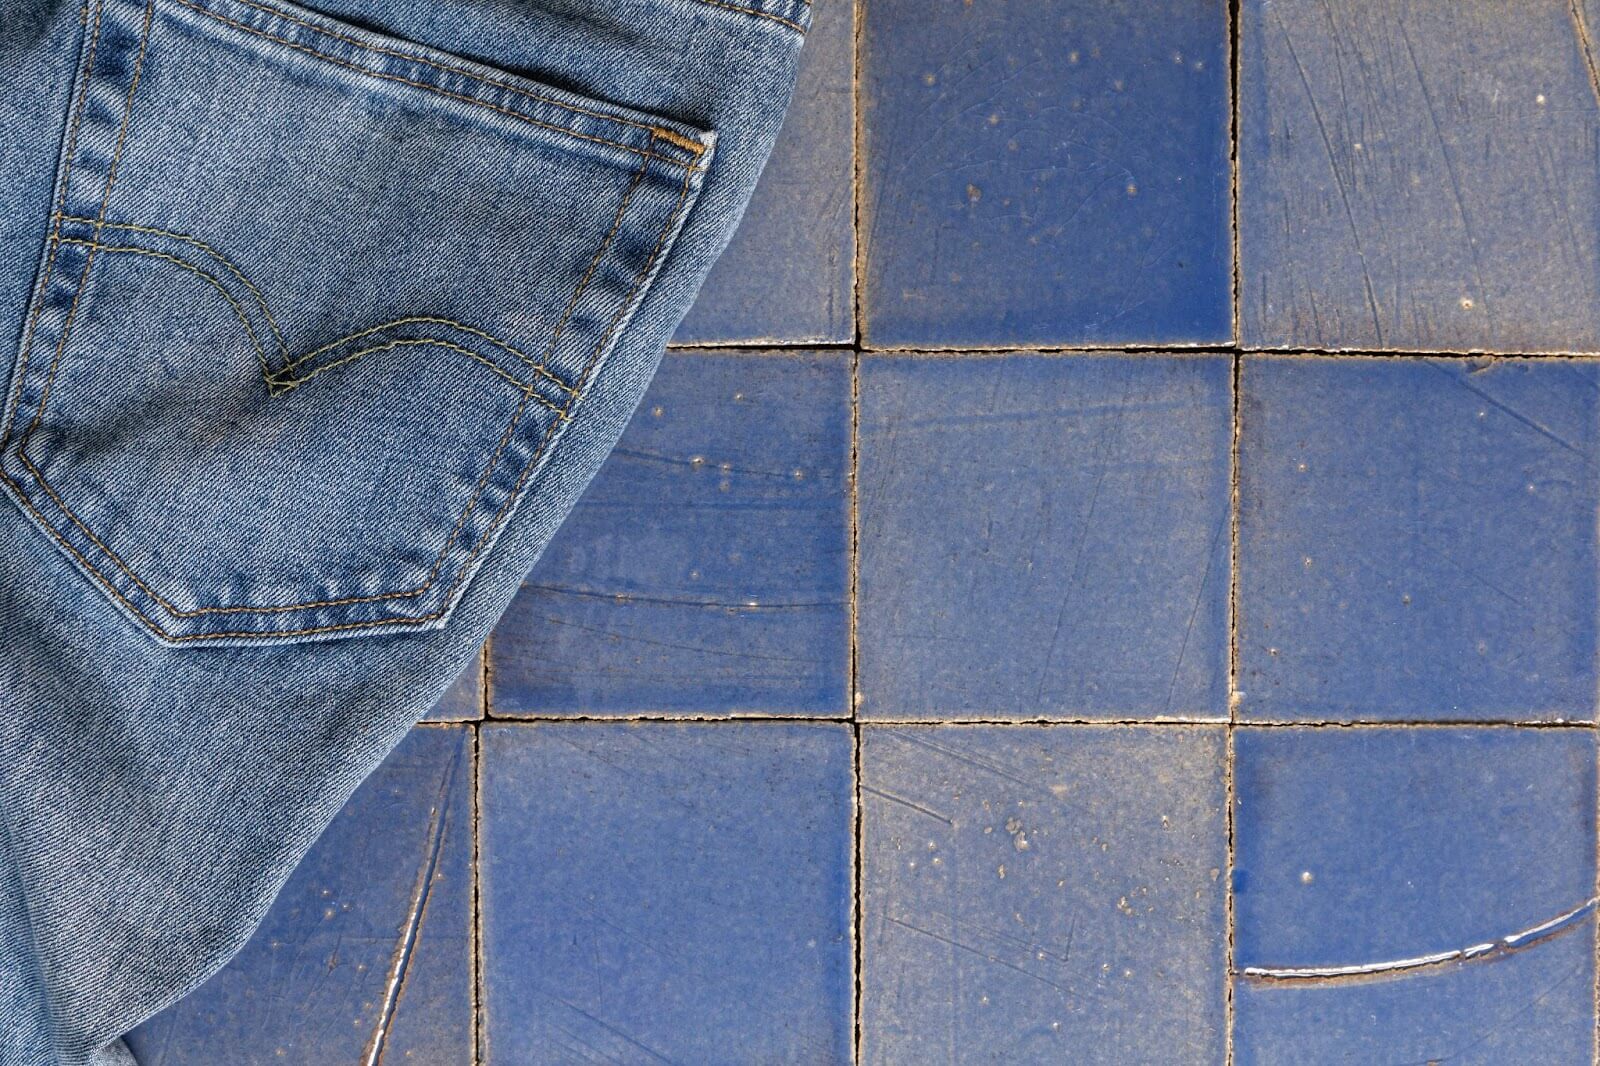 Denim jeans placed atop different tones of blue tiles